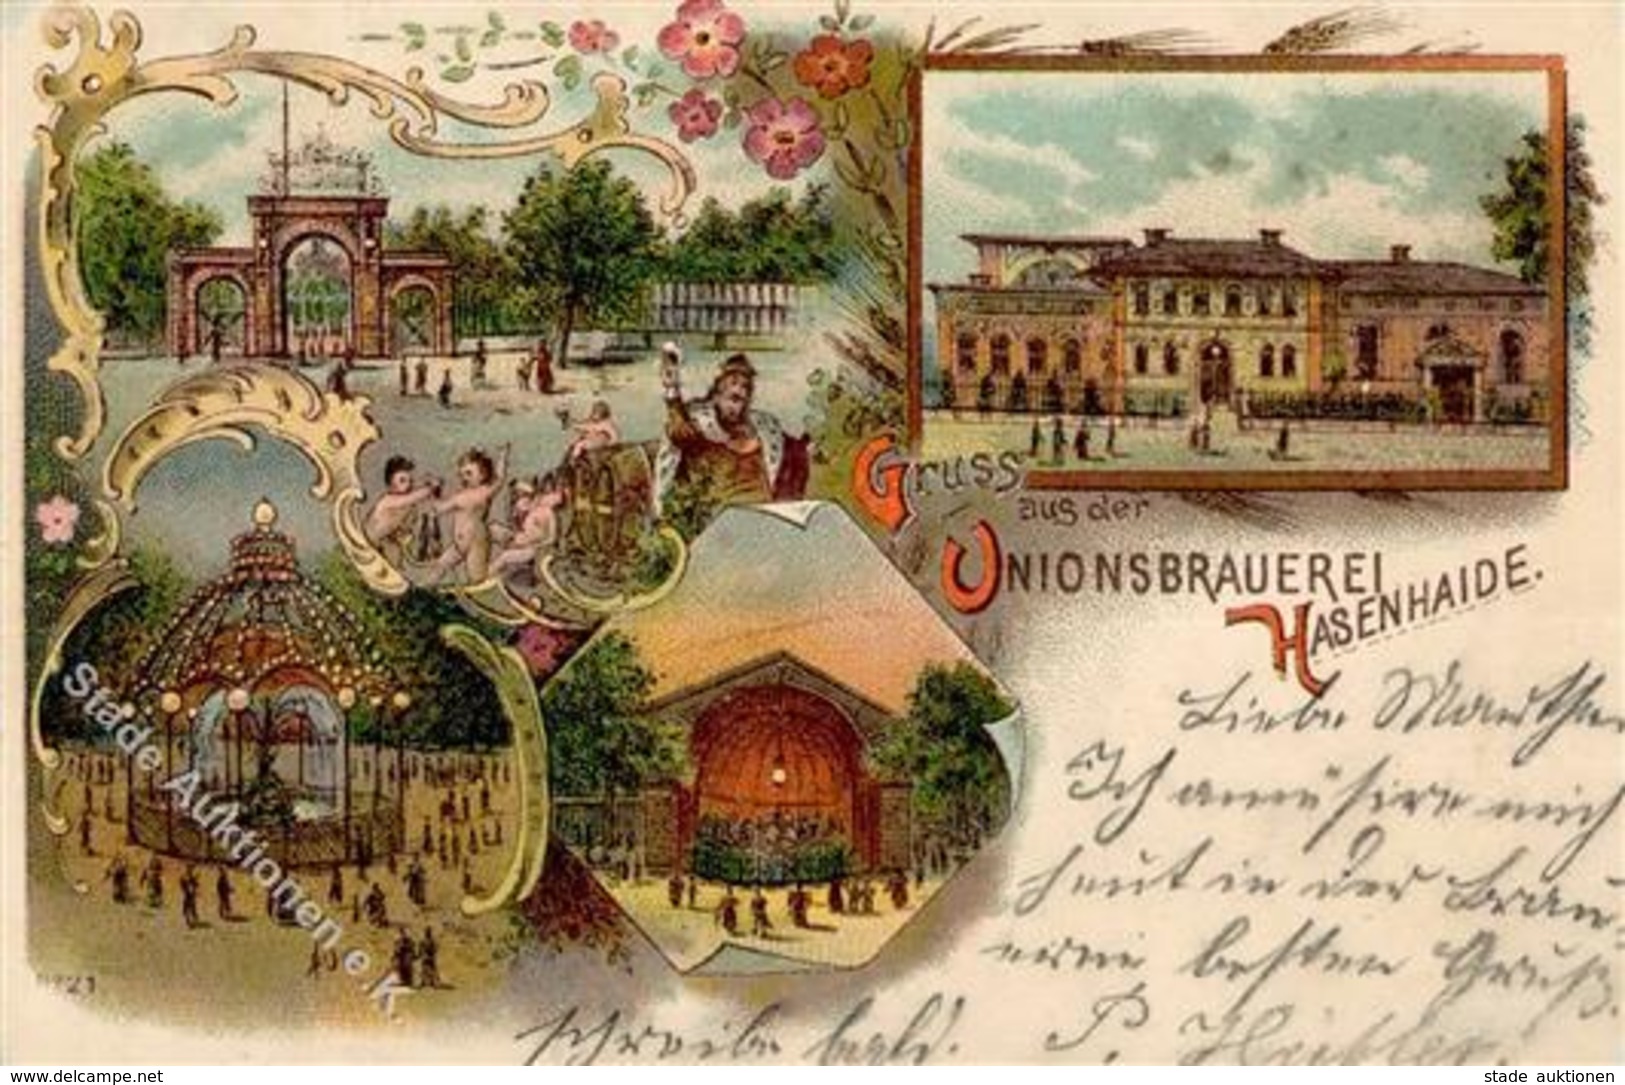 Rixdorf (1000) Brauerei Hasenhaide Lithographie 1901 I-II - Cameroon